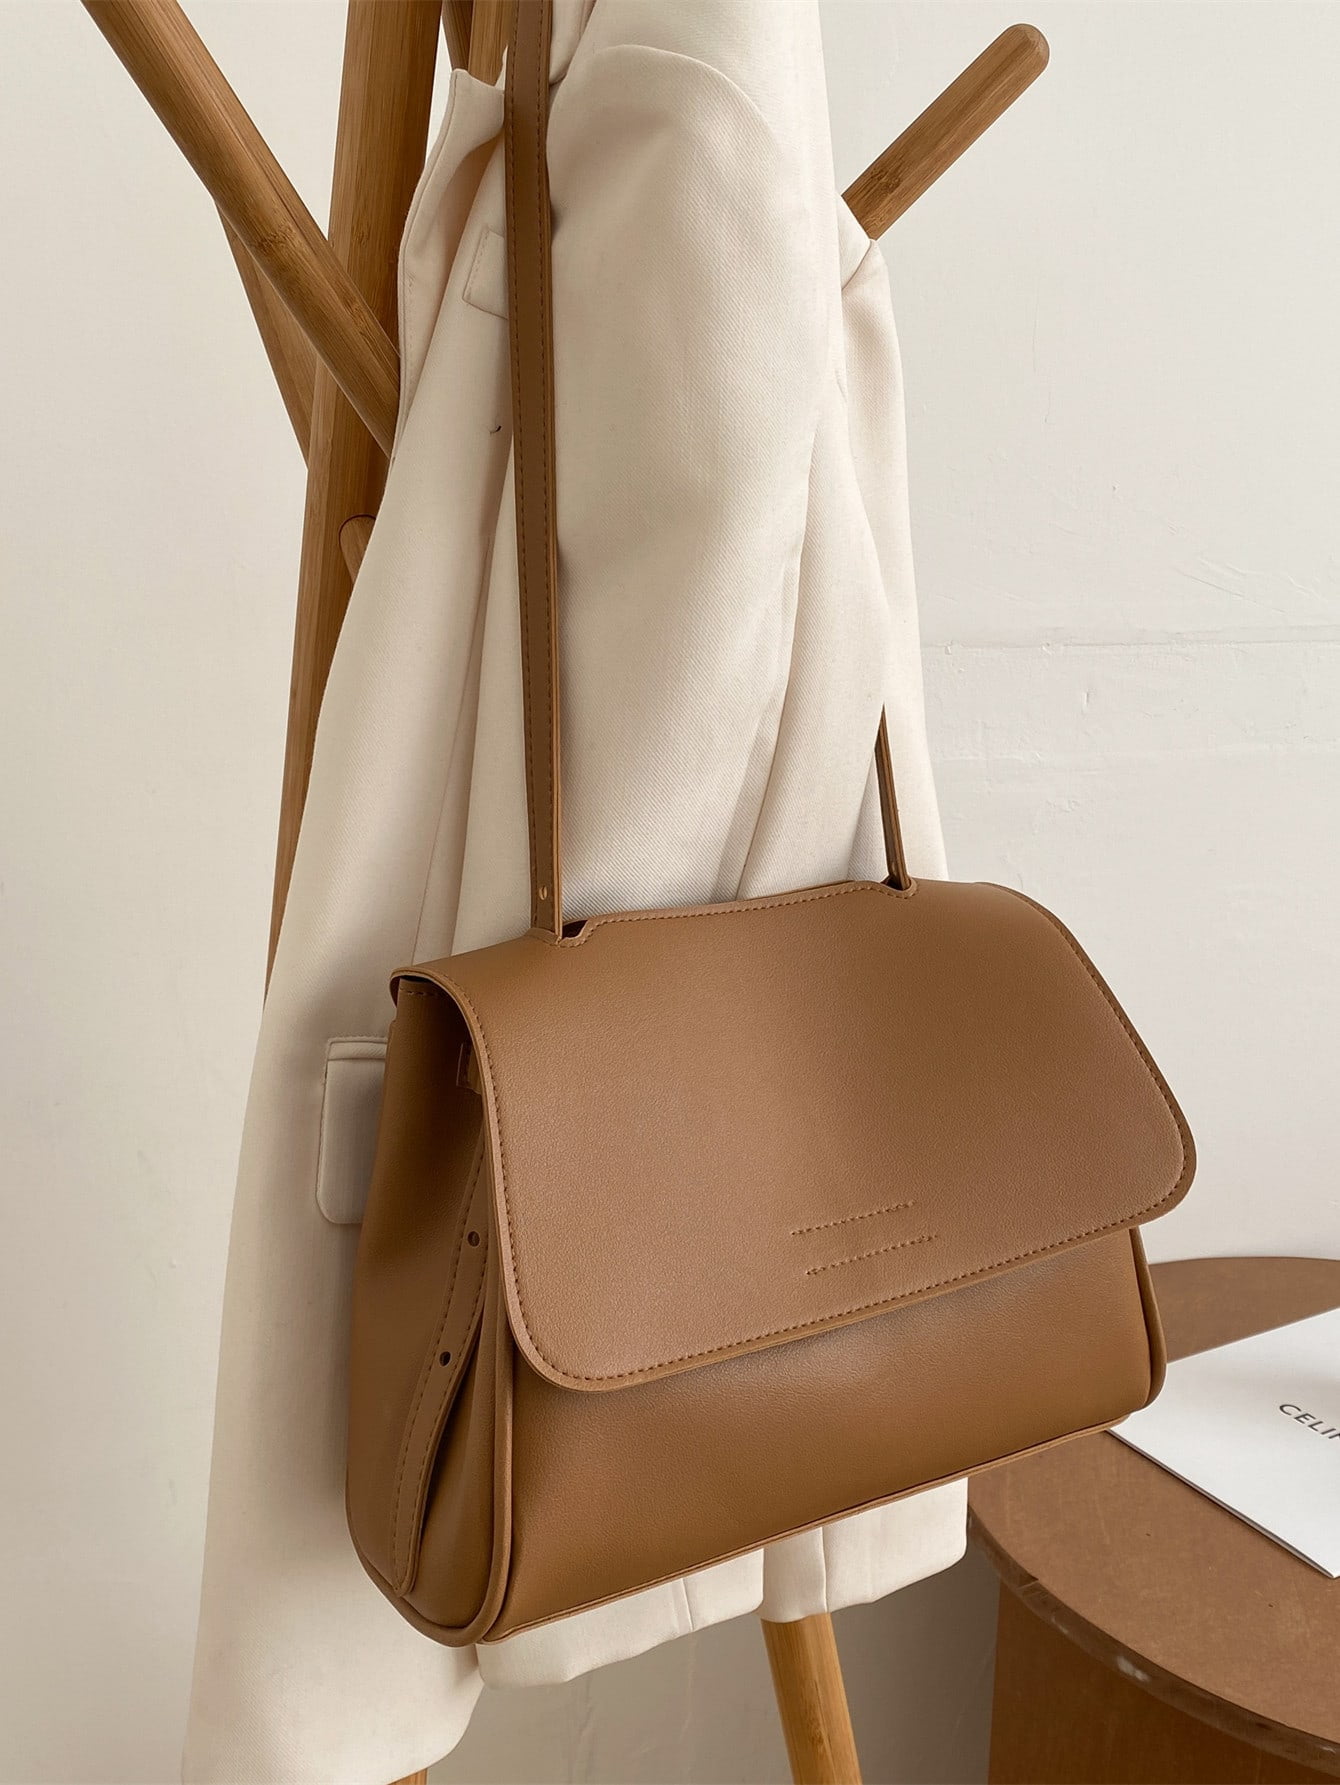 Leather Flap Handbag Piano Design Top Handle Women Shoulder Crossbody Bags 